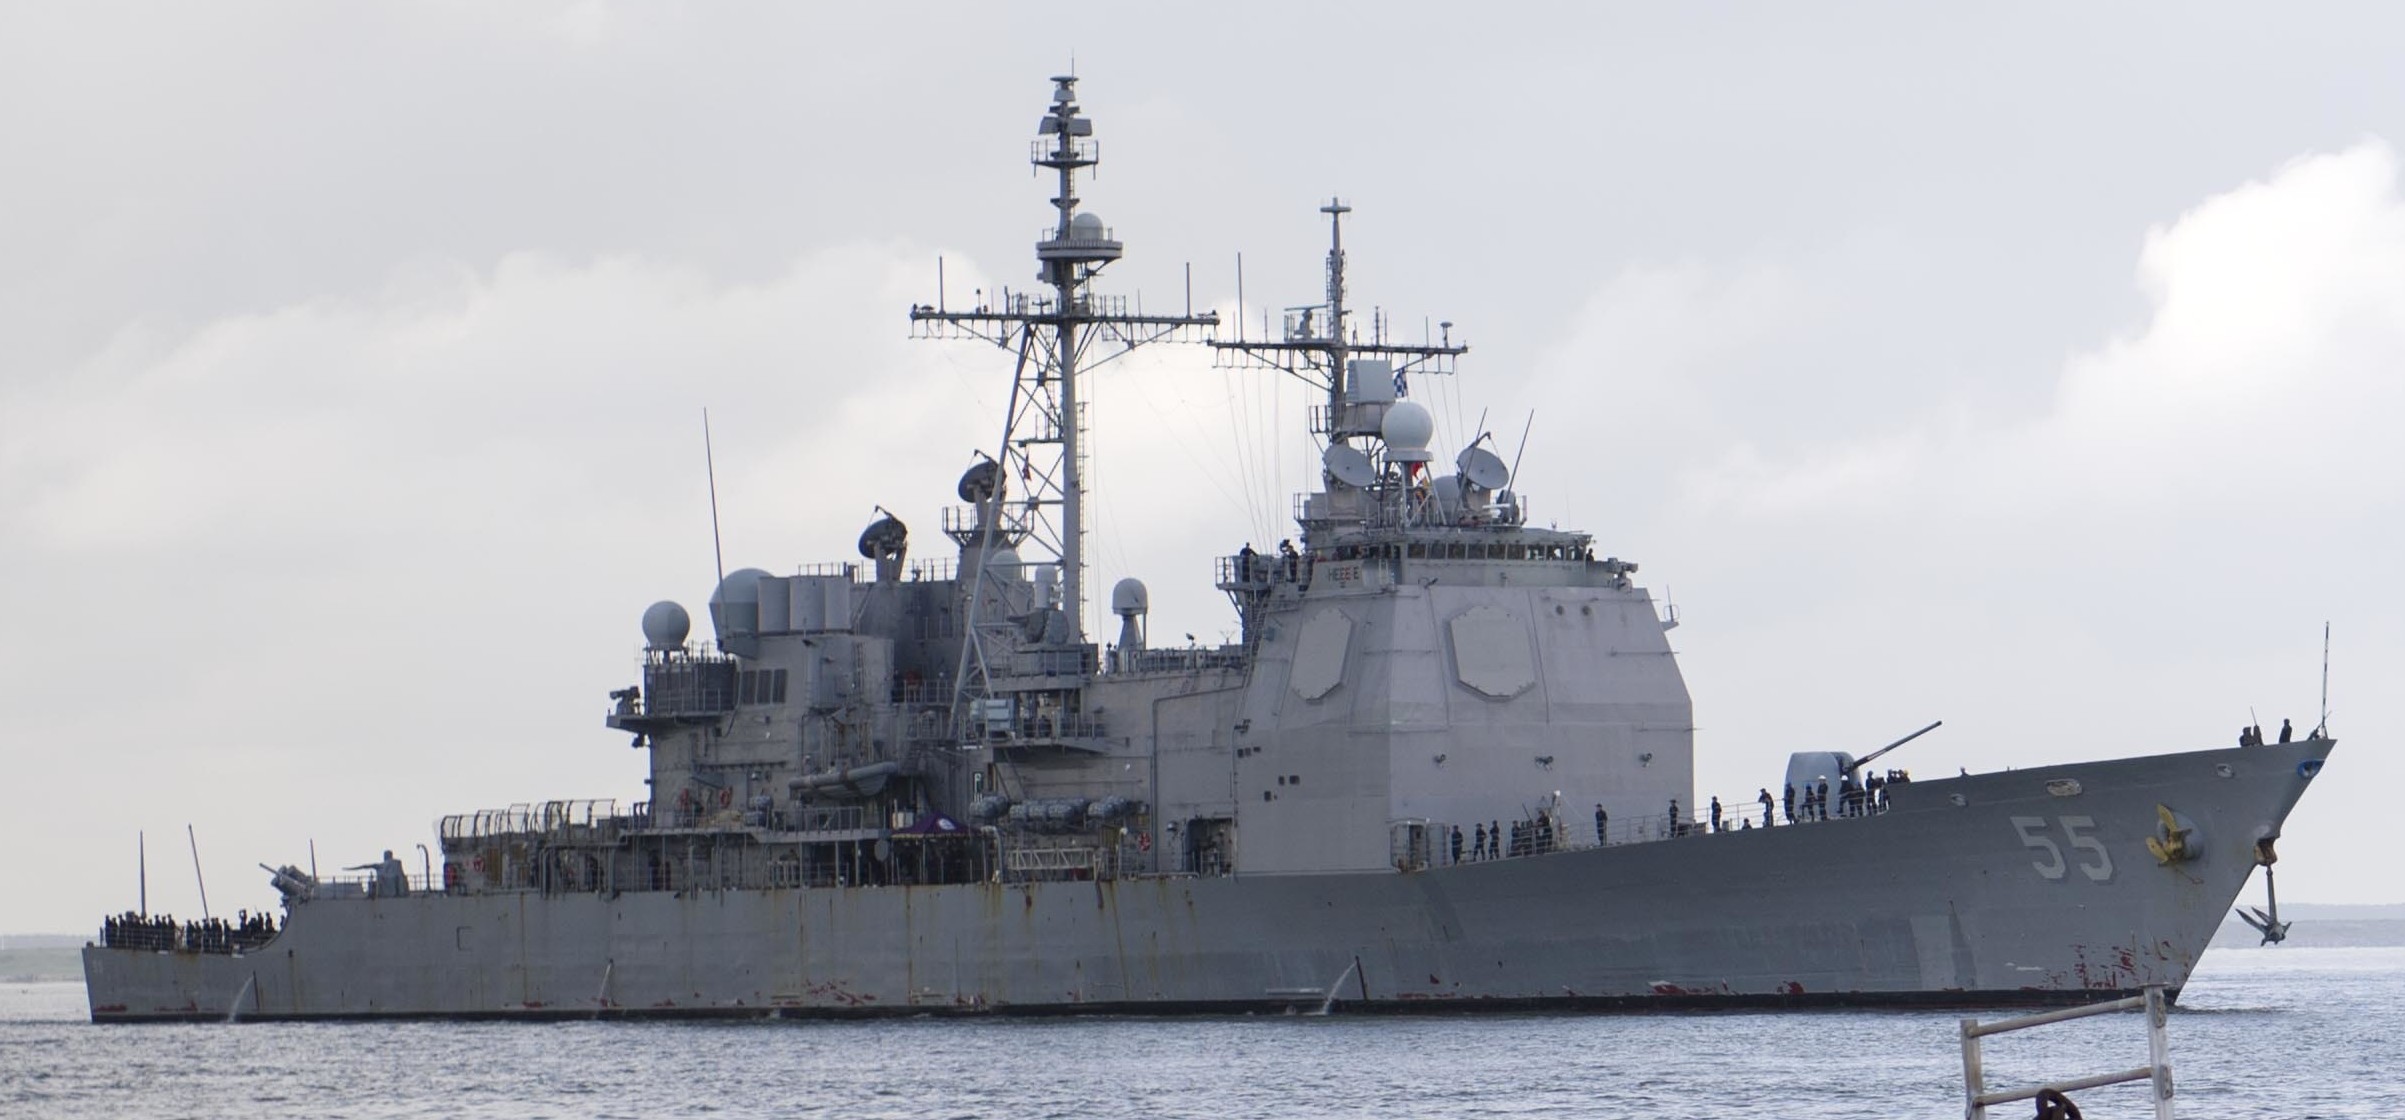 cg-55 uss leyte gulf ticonderoga class guided missile cruiser aegis us navy norfolk 60